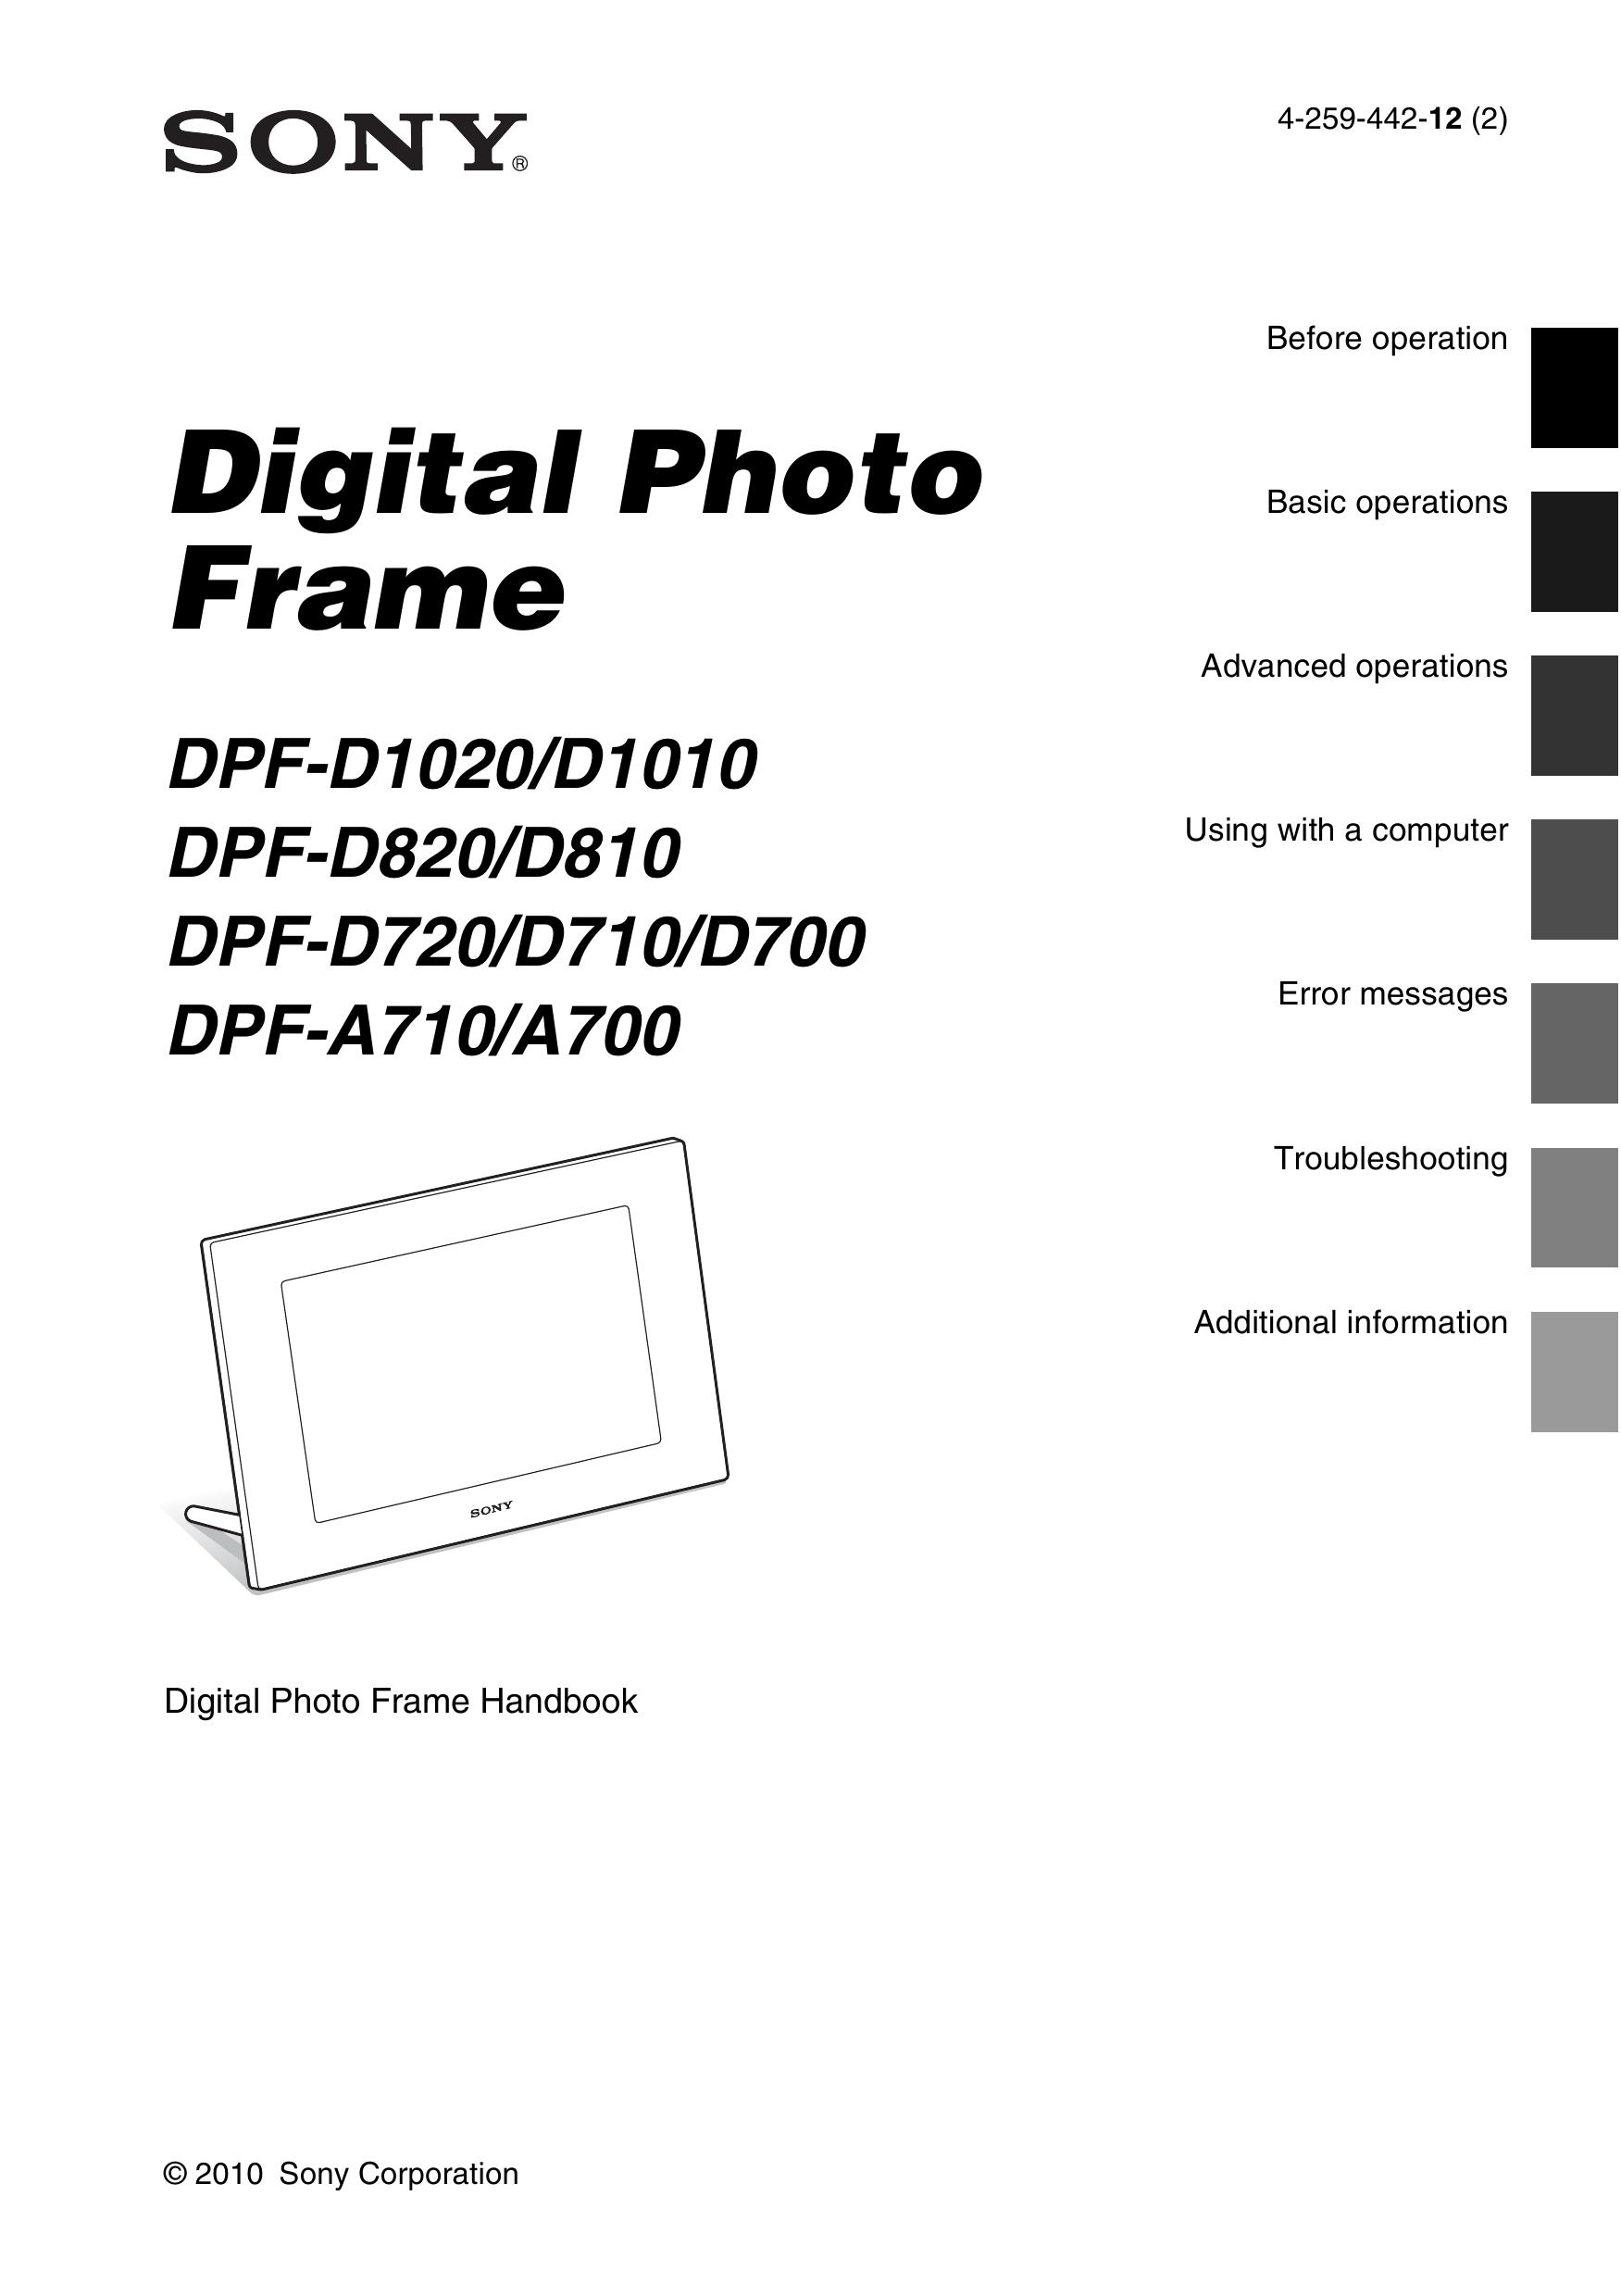 Sony DPF-D820/D810 Digital Photo Frame User Manual